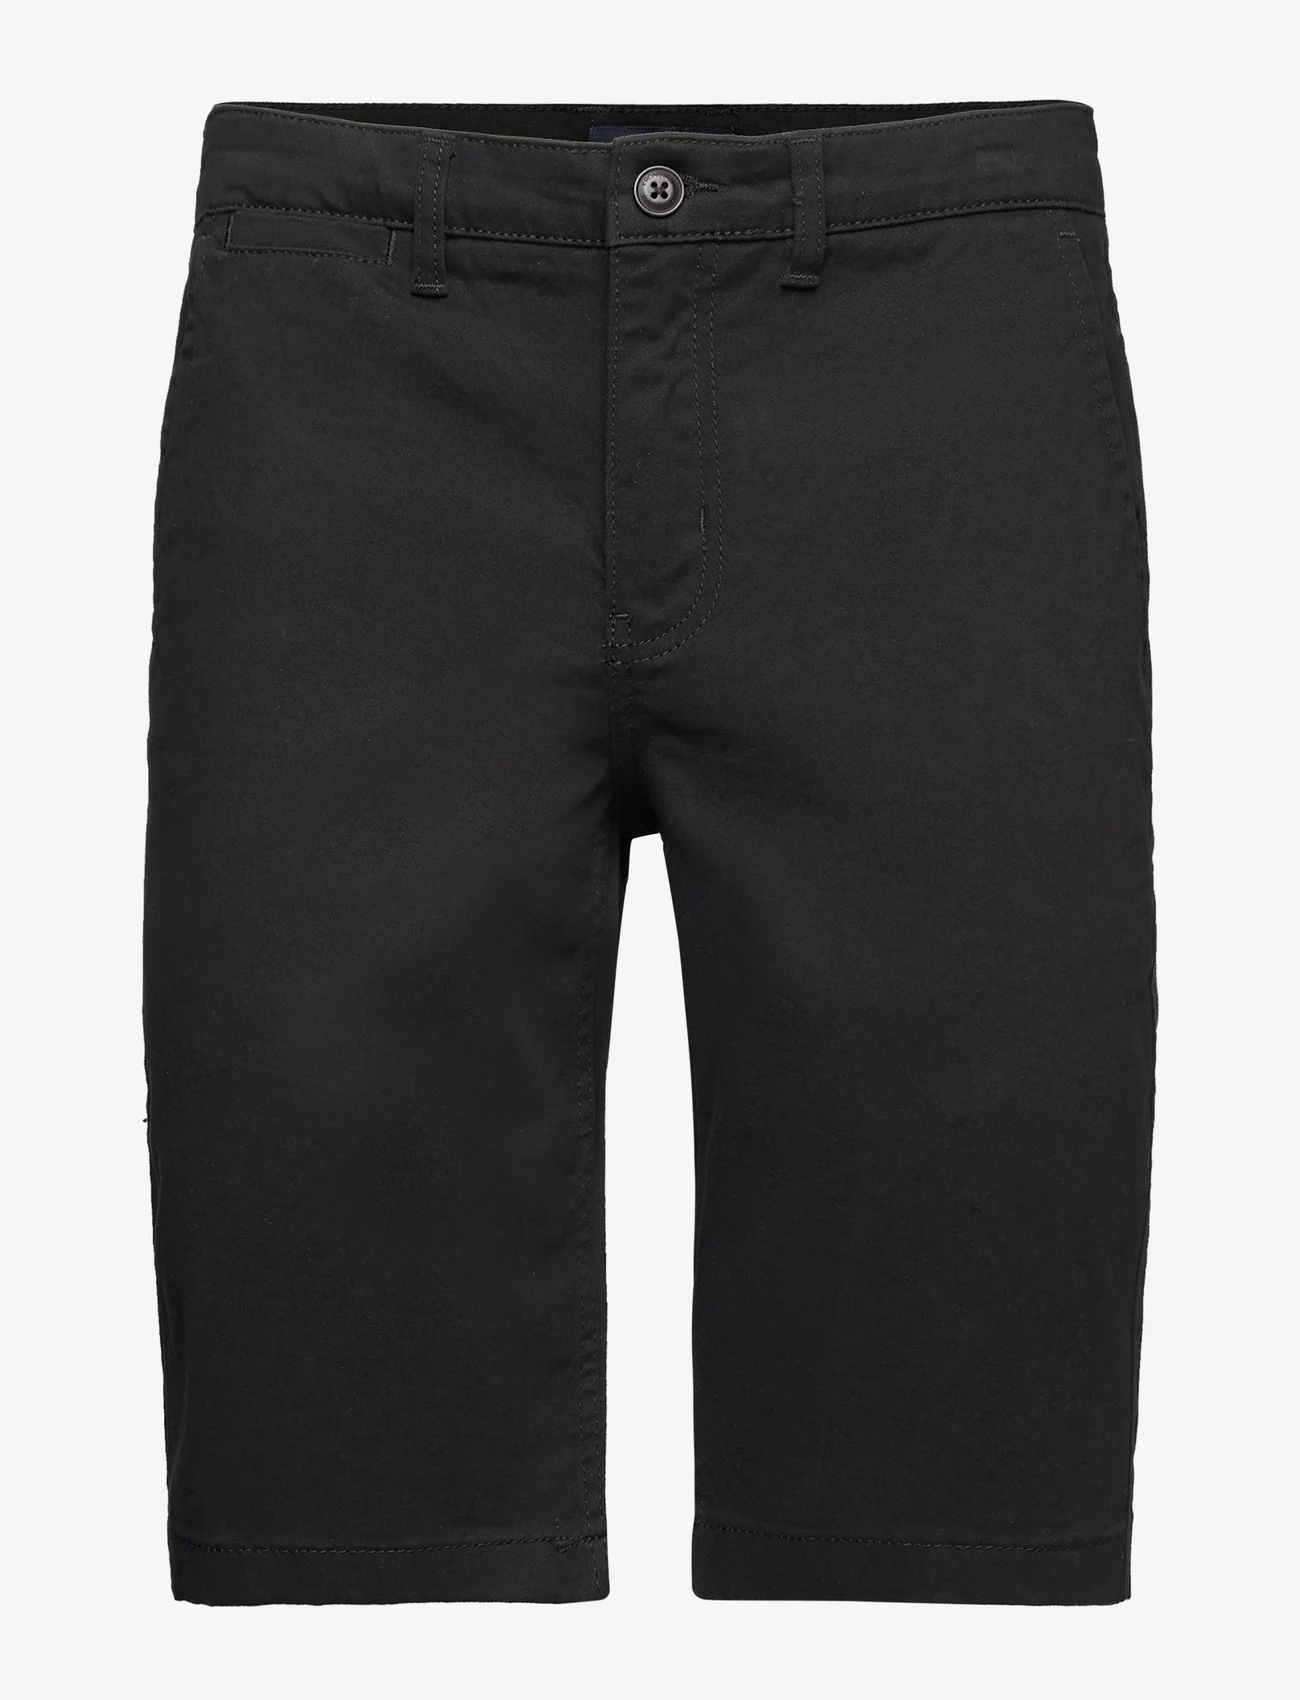 Kronstadt - Jonas Twill shorts - chino shorts - black - 0